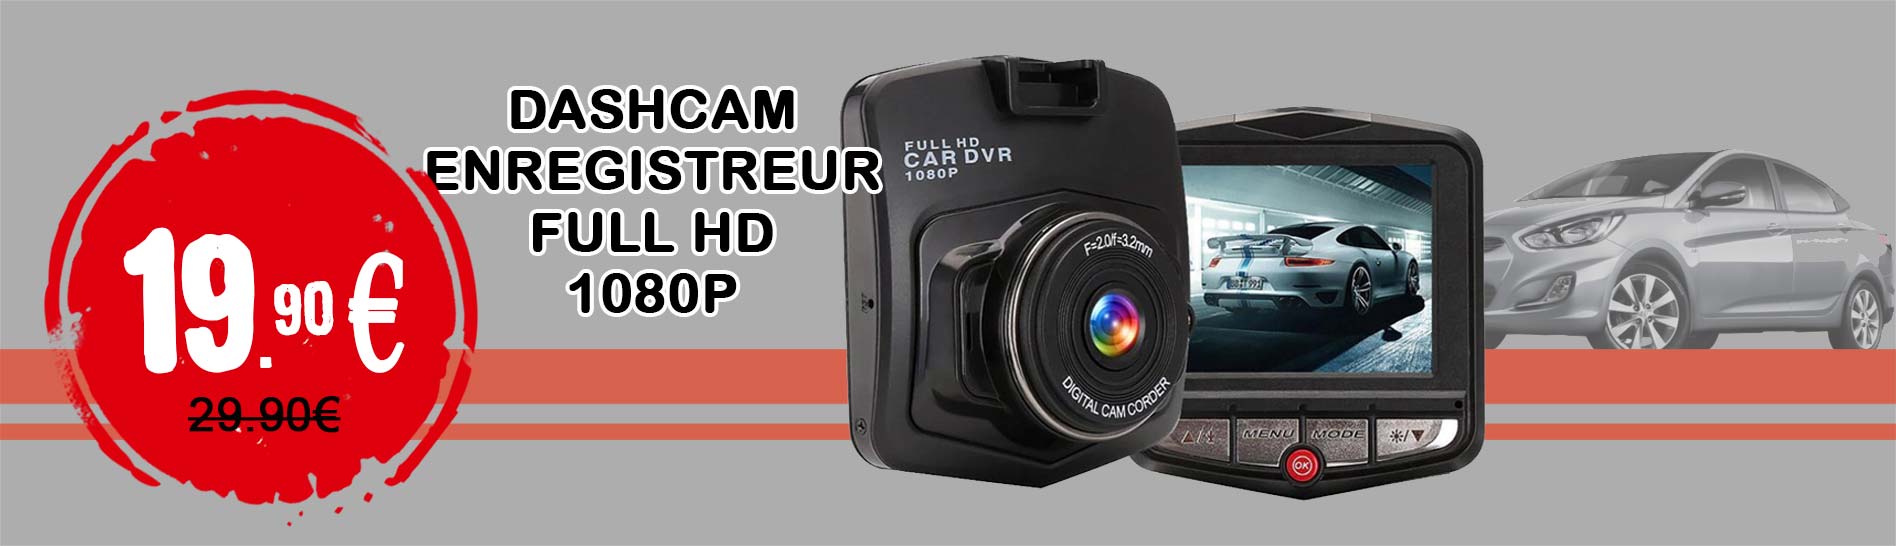 slider-dashcam-1080p-call-of-security